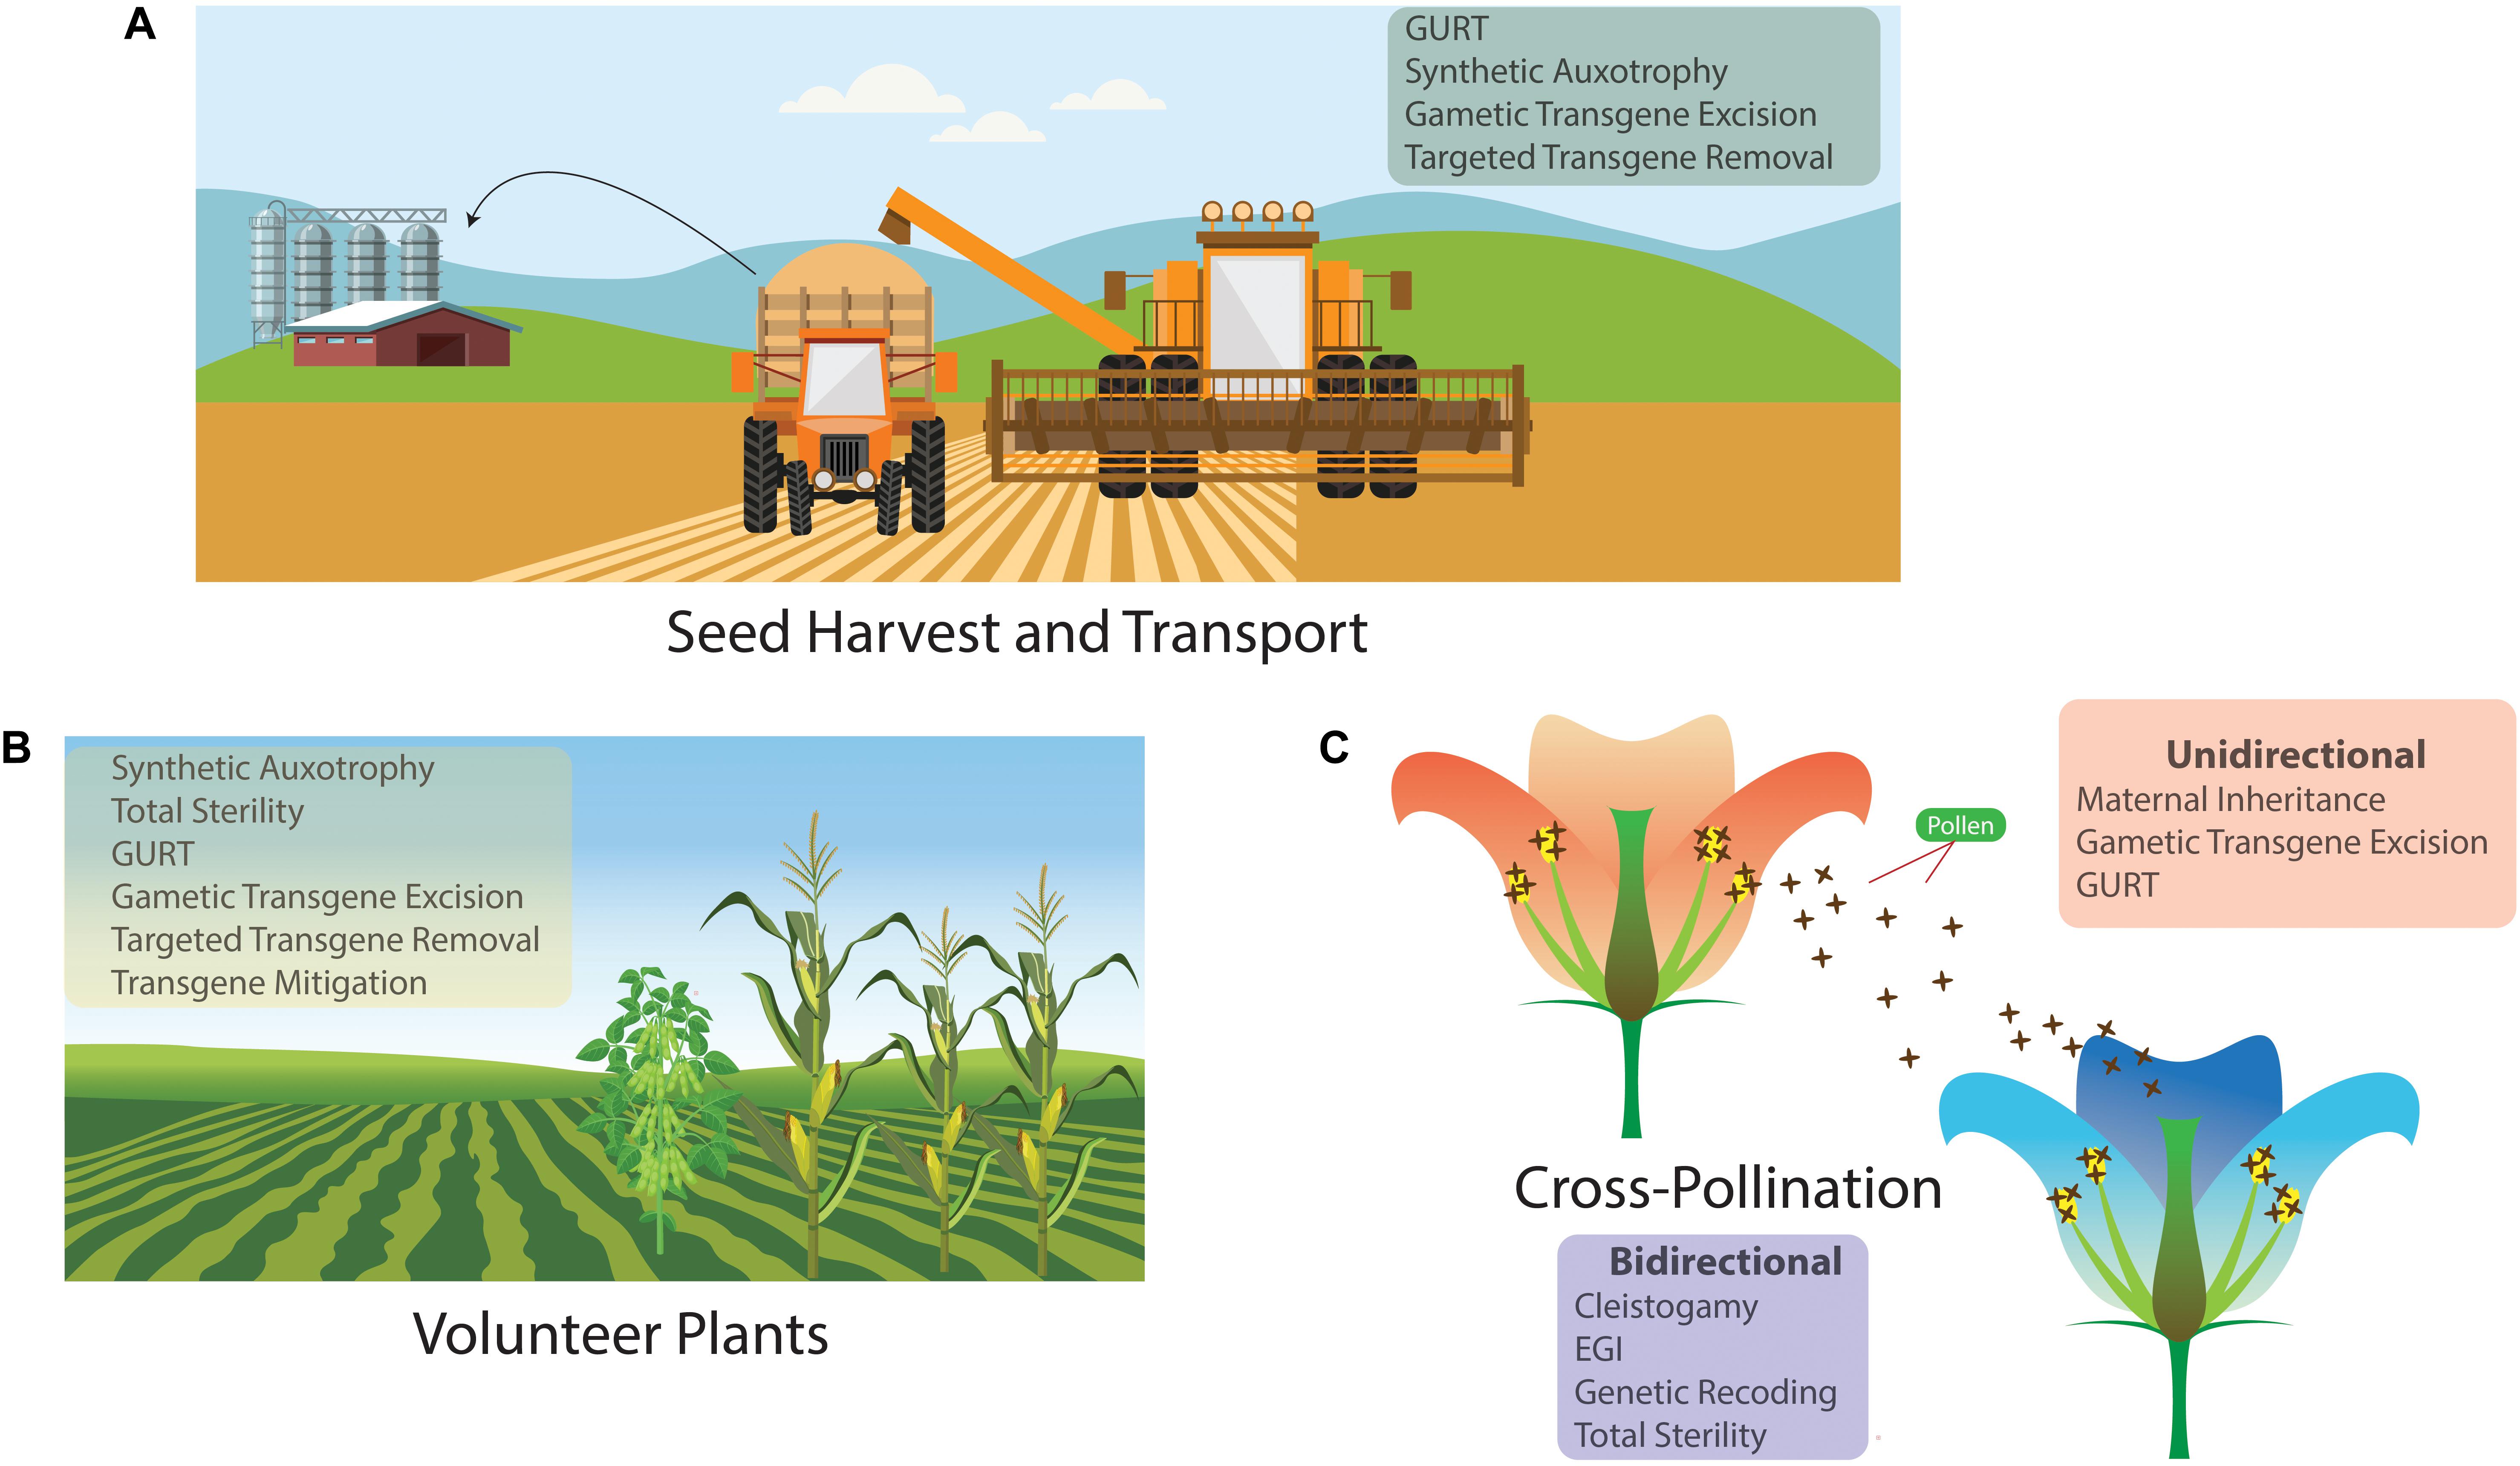 Frontiers | Transgene Biocontainment Strategies for Molecular Farming